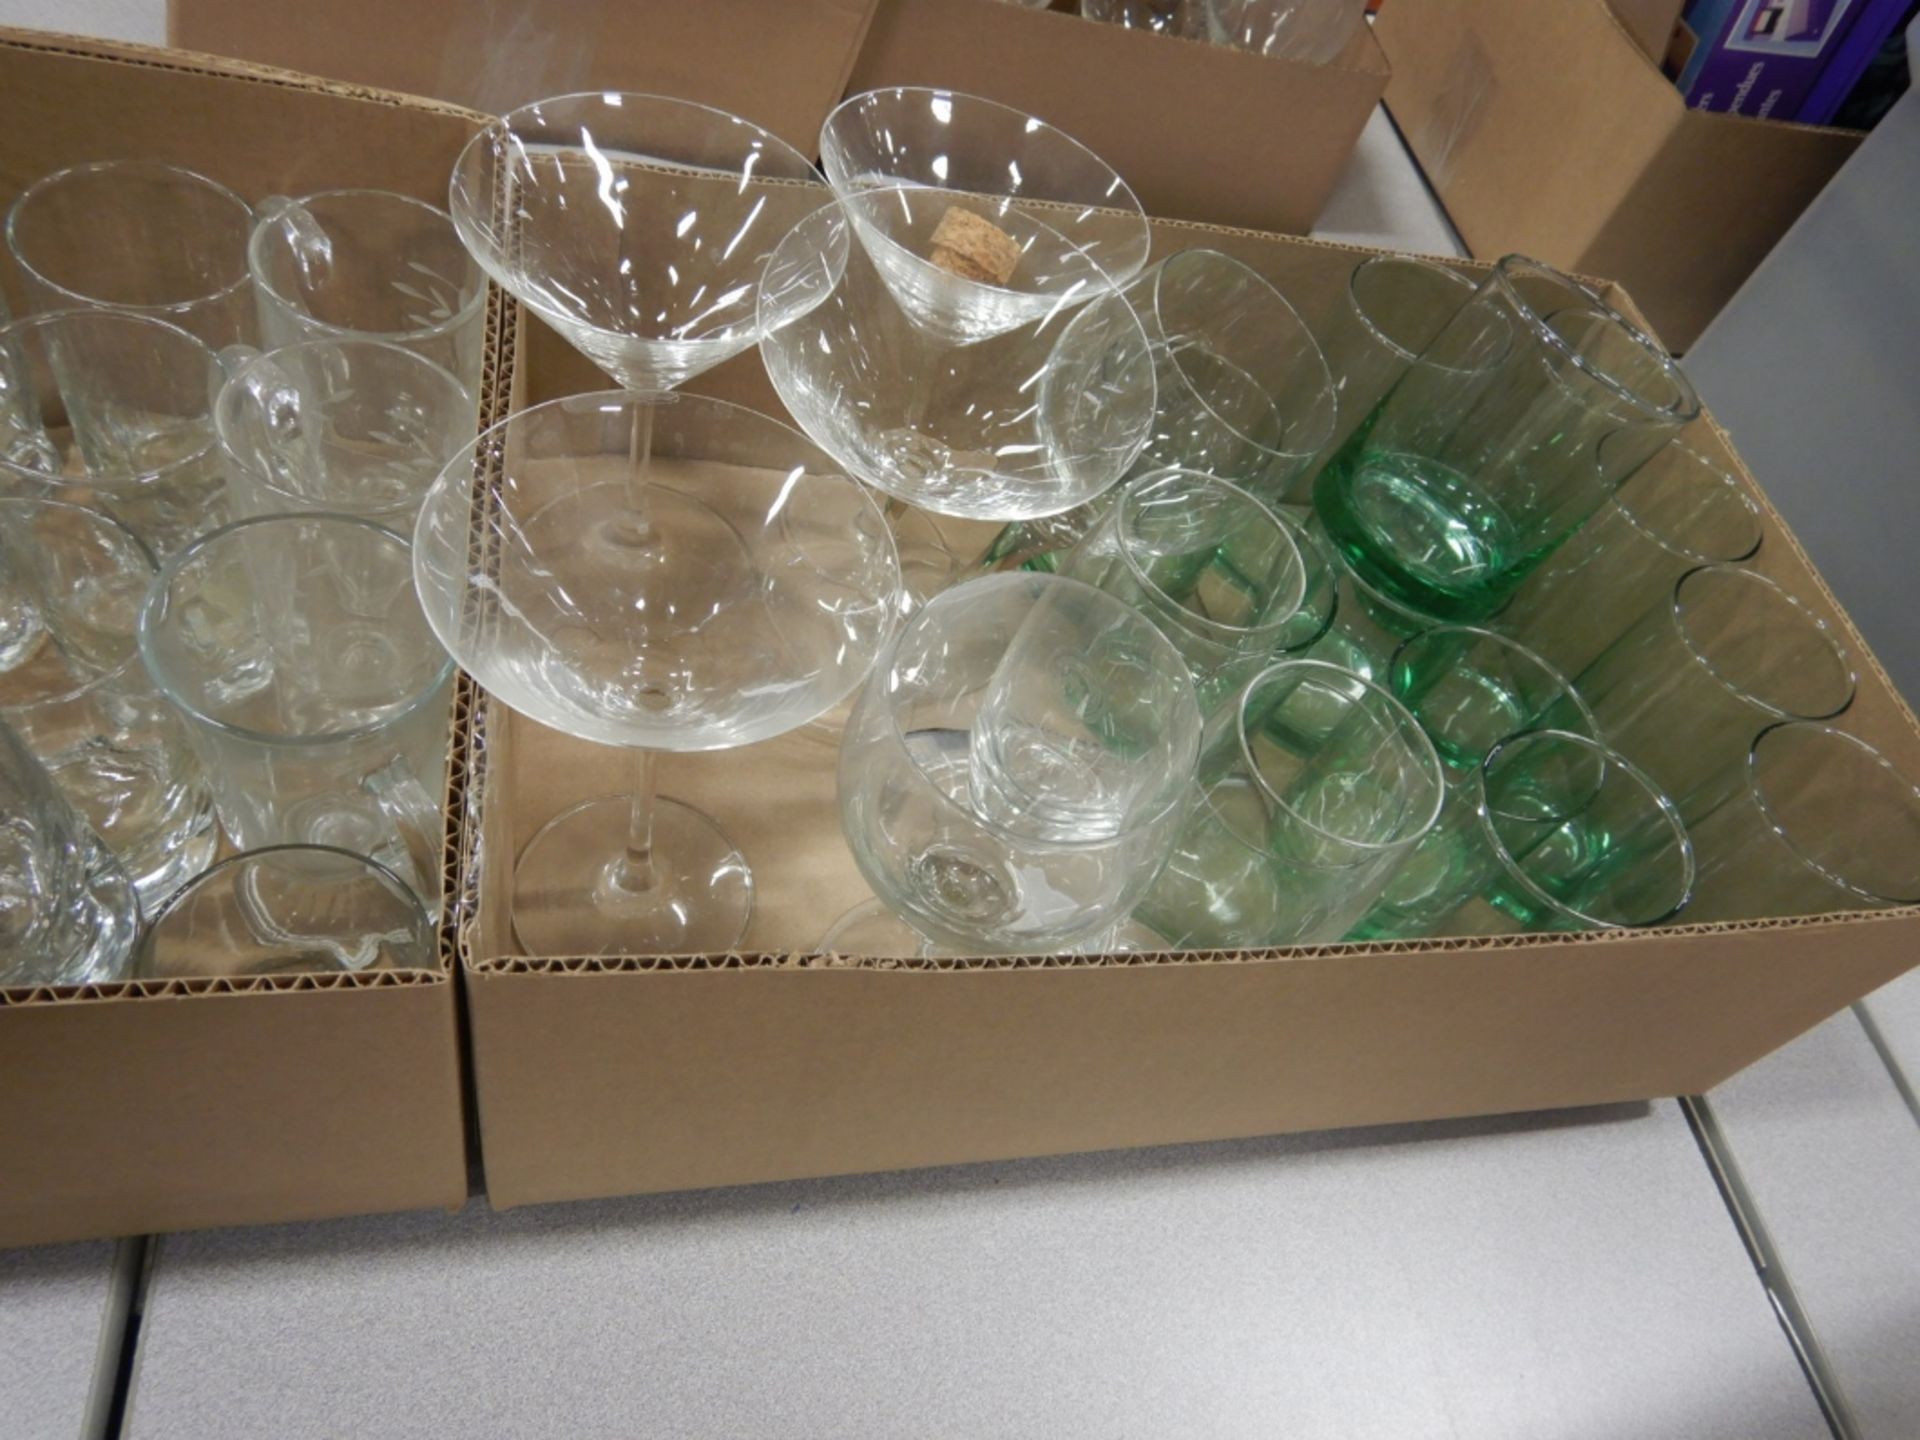 L/O KITCHEN GLASSES AND STEMWARE, COFFEE MUGS, ETC - Image 2 of 3